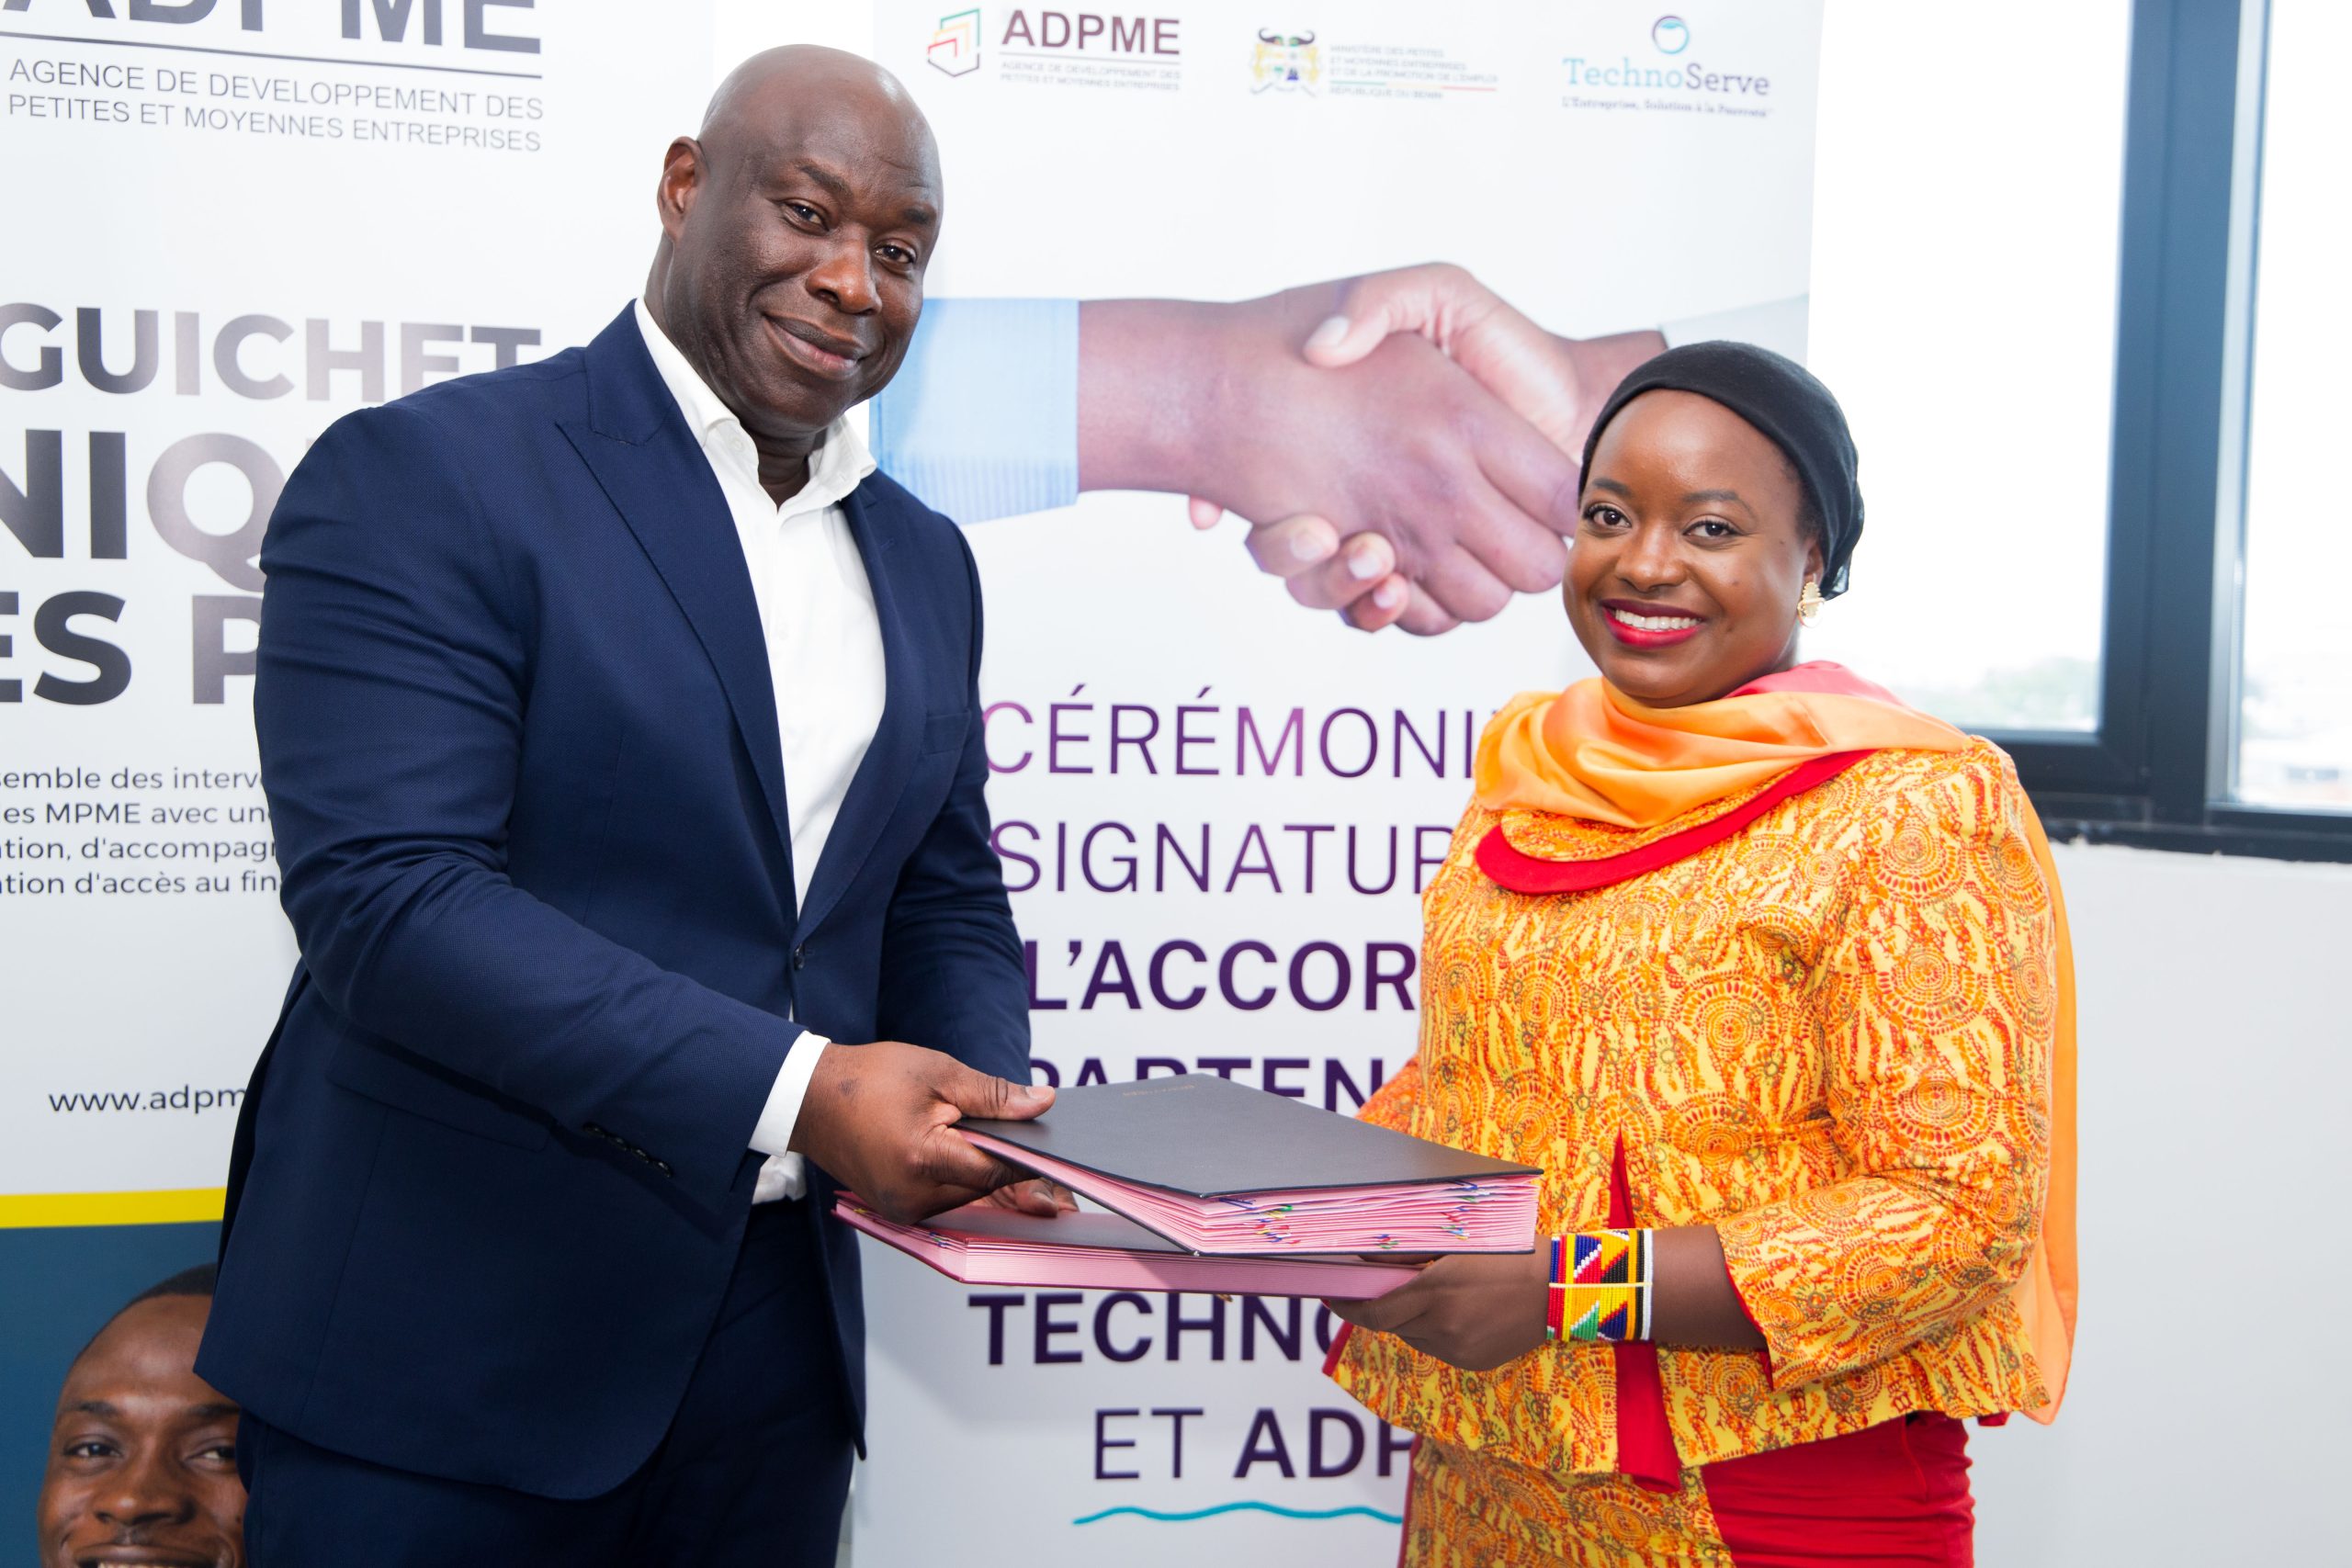 TechnoServe and the Benin Agency for the Development of Small and Medium Enterprises (ADPME) Sign Partnership Agreement to Strengthen Entrepreneurship in Benin